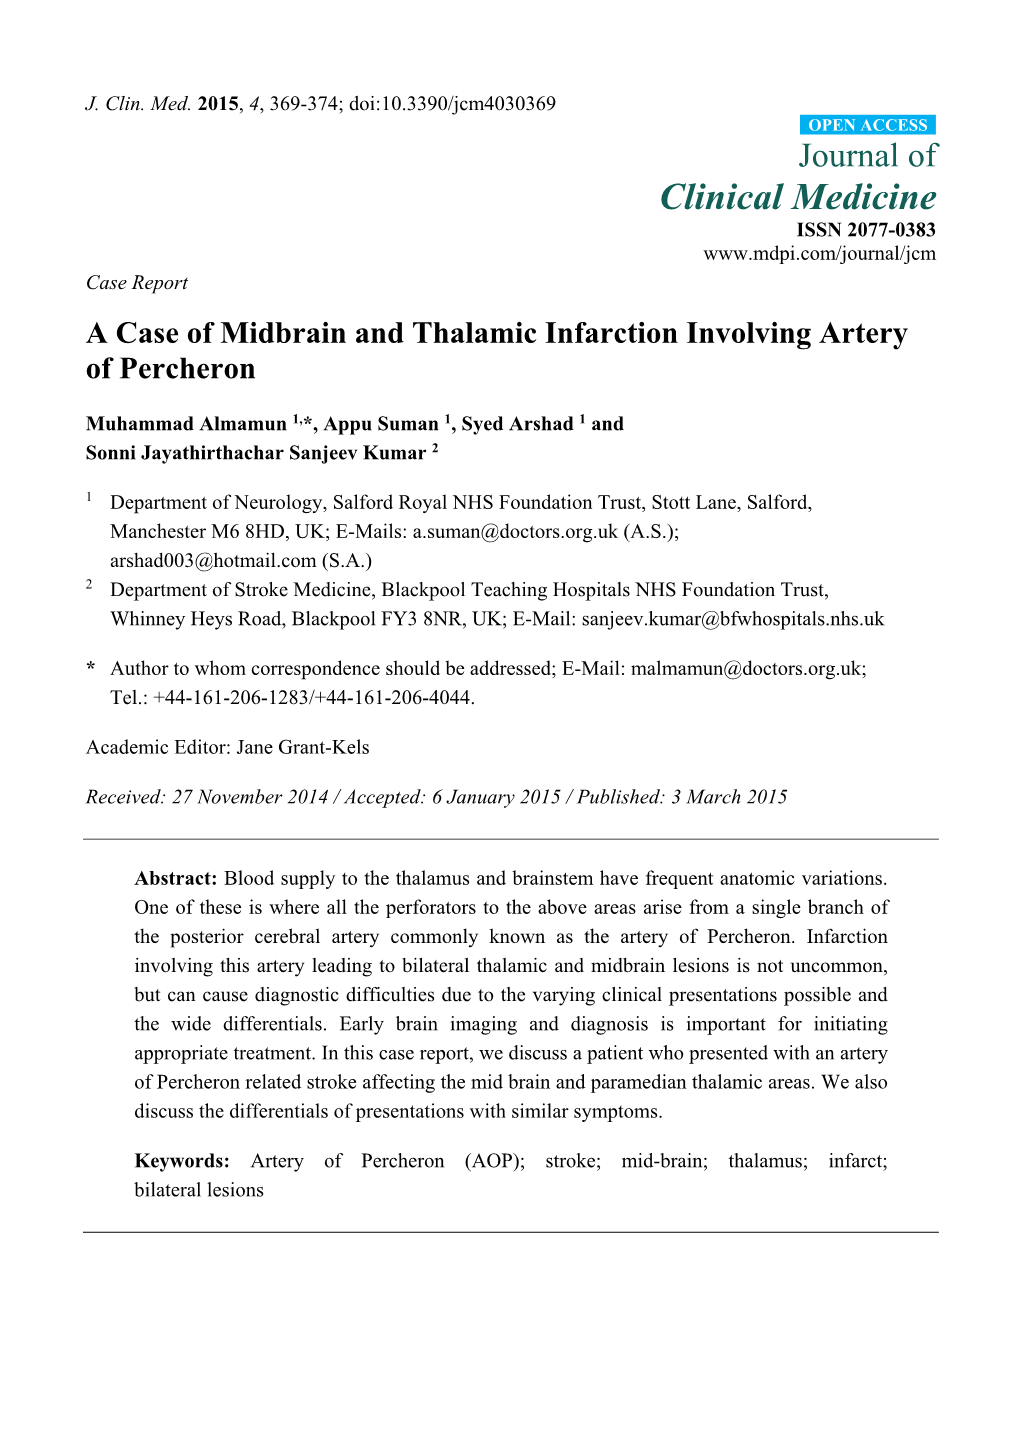 A Case of Midbrain and Thalamic Infarction Involving Artery of Percheron